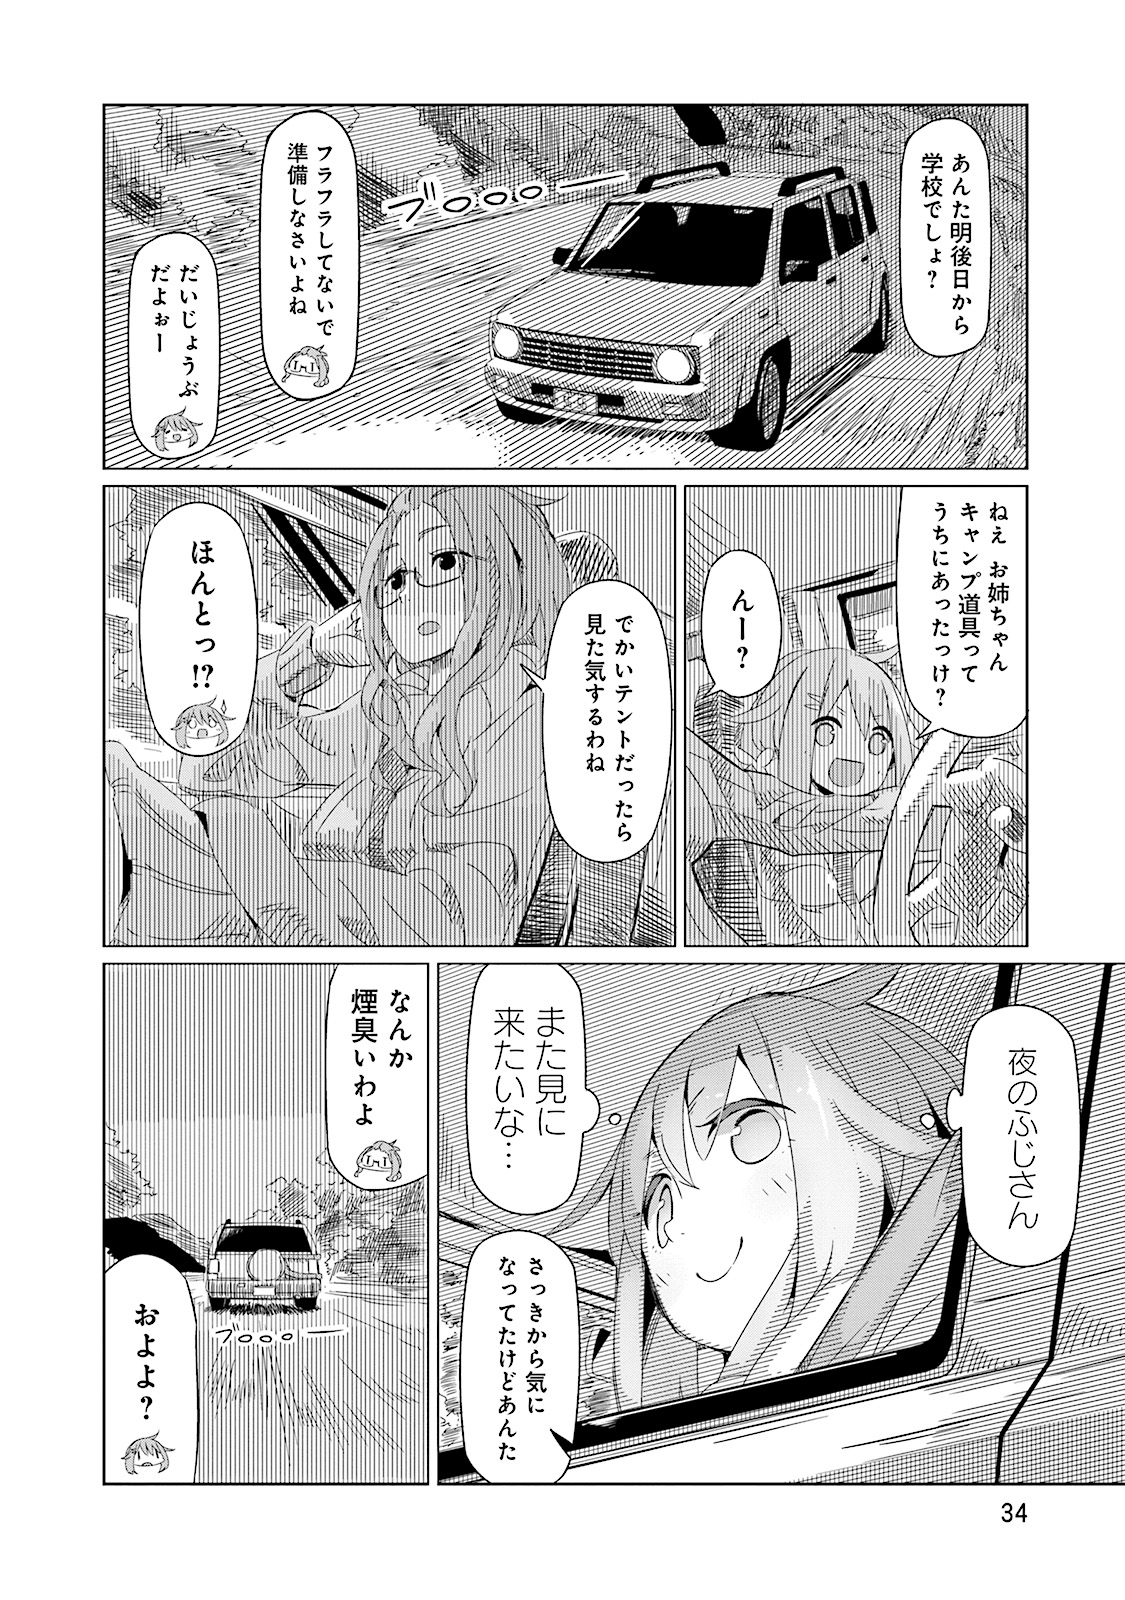 Yuru Camp - Chapter 1 - Page 36